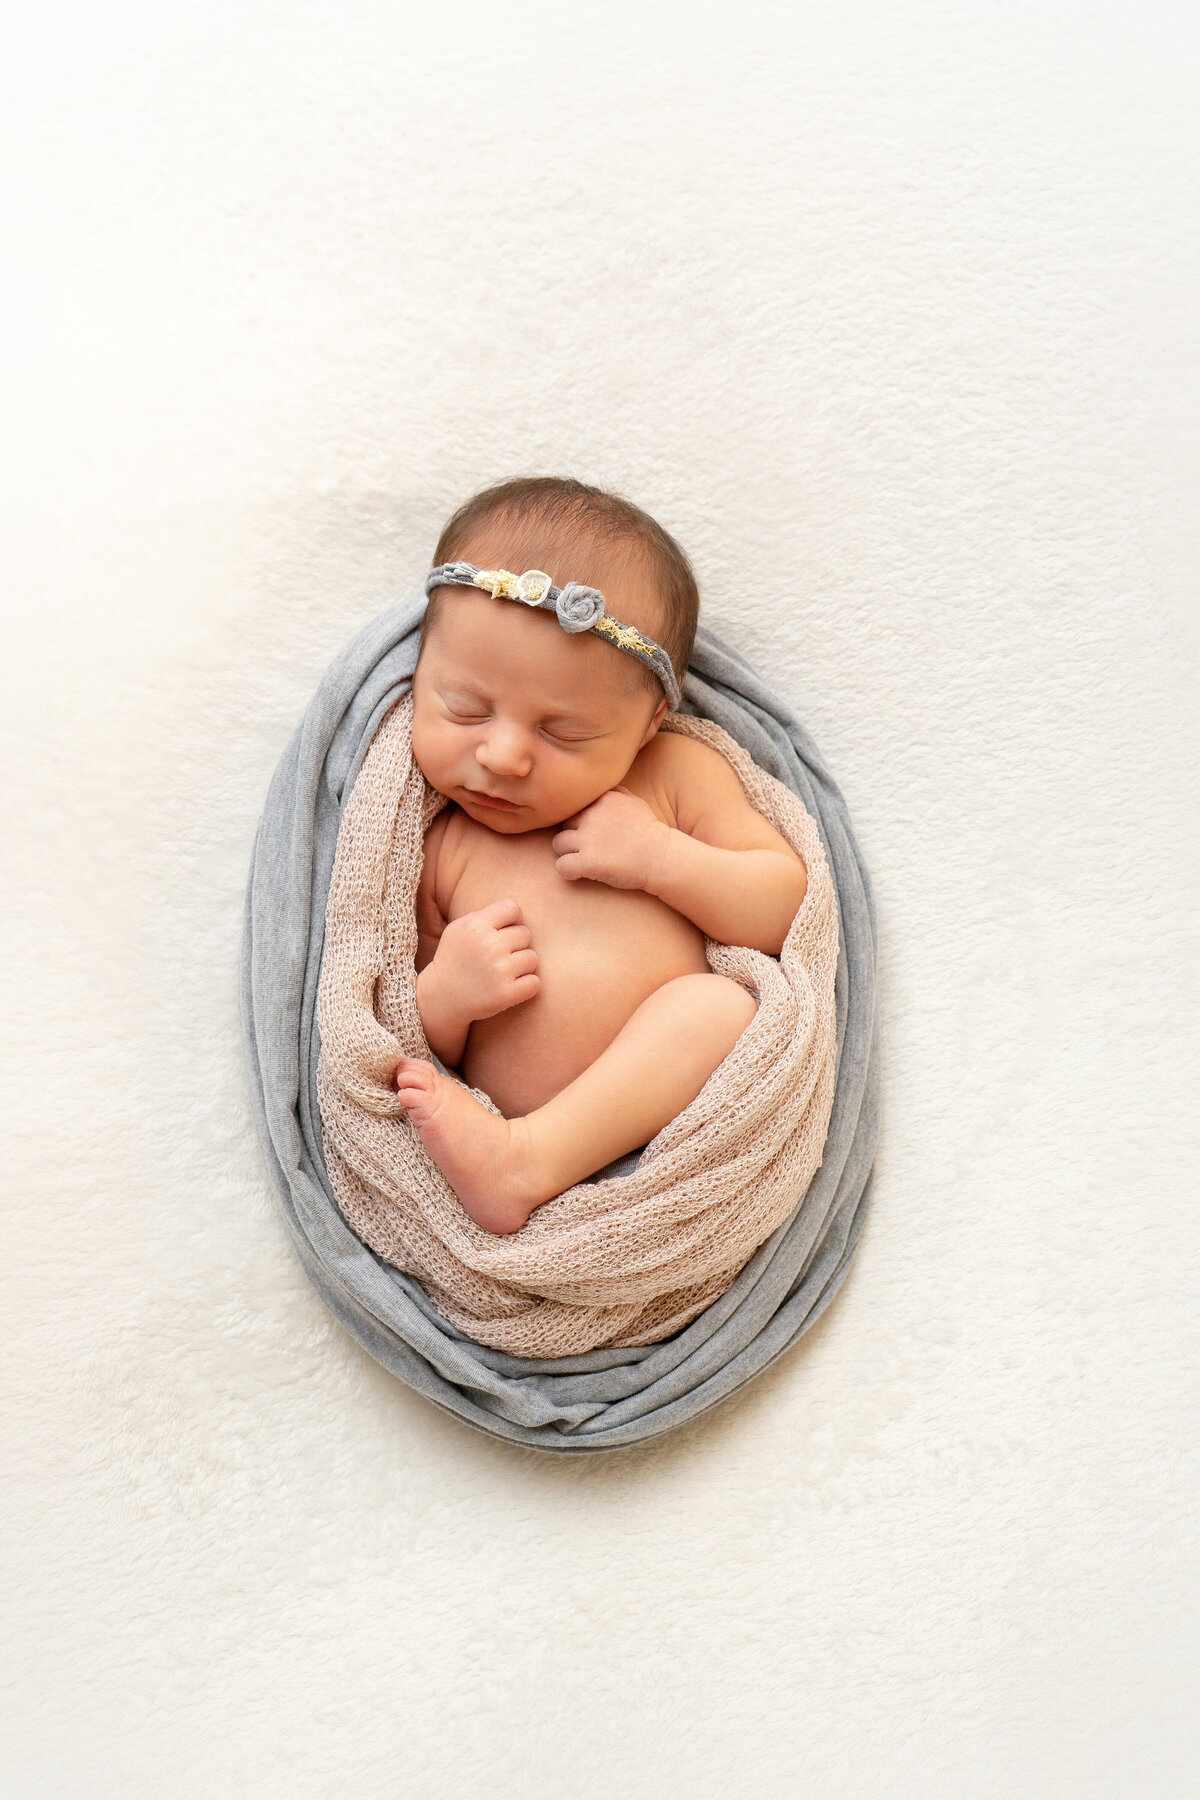 newborn-baby-swaddled-in-blankets